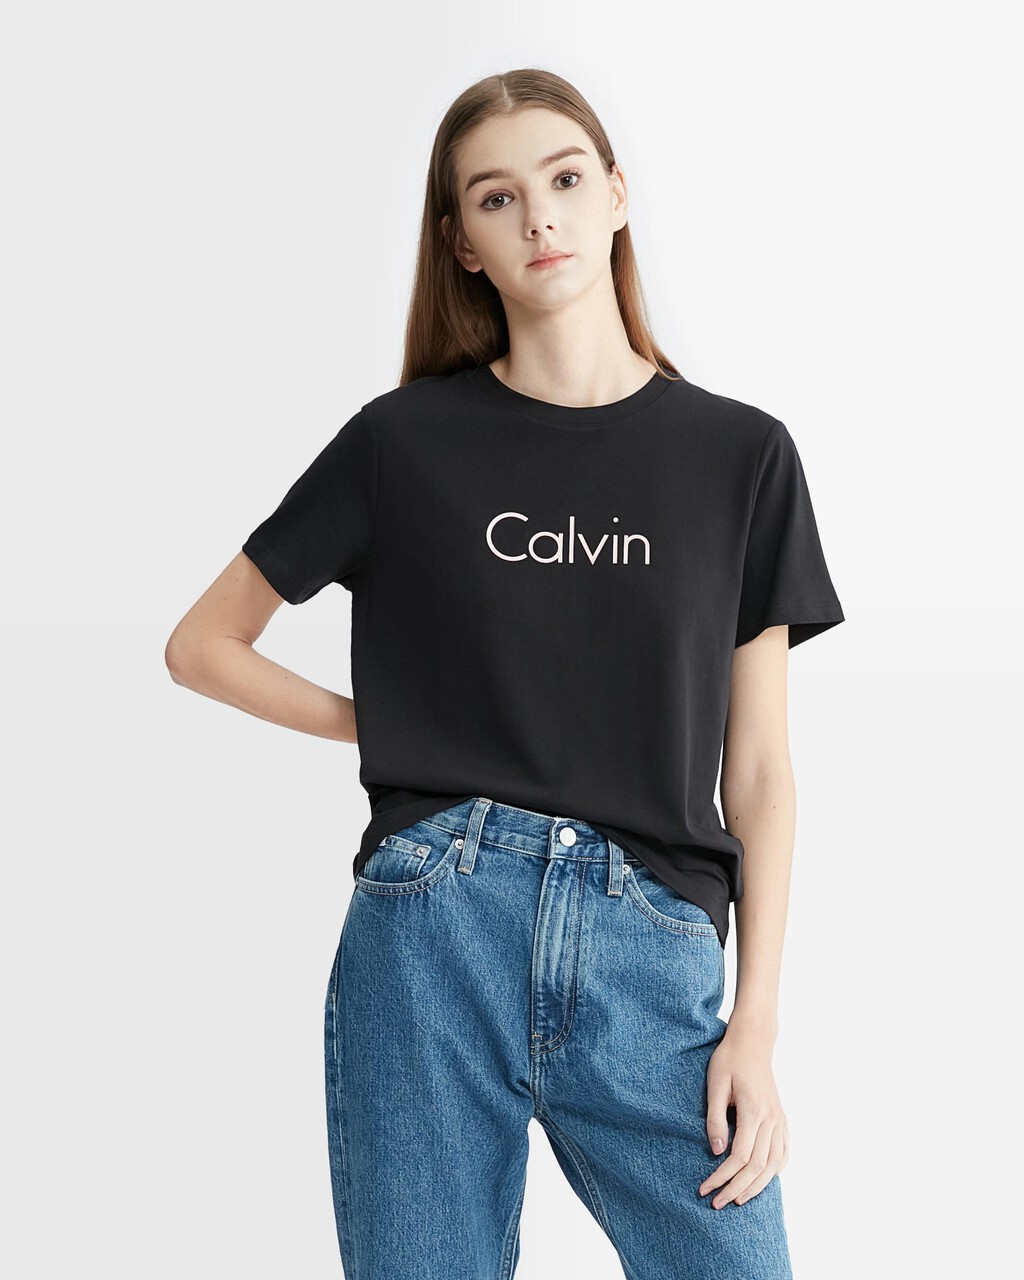 Calvin Klein - T-shirt - Ck Black / BLACK - Black